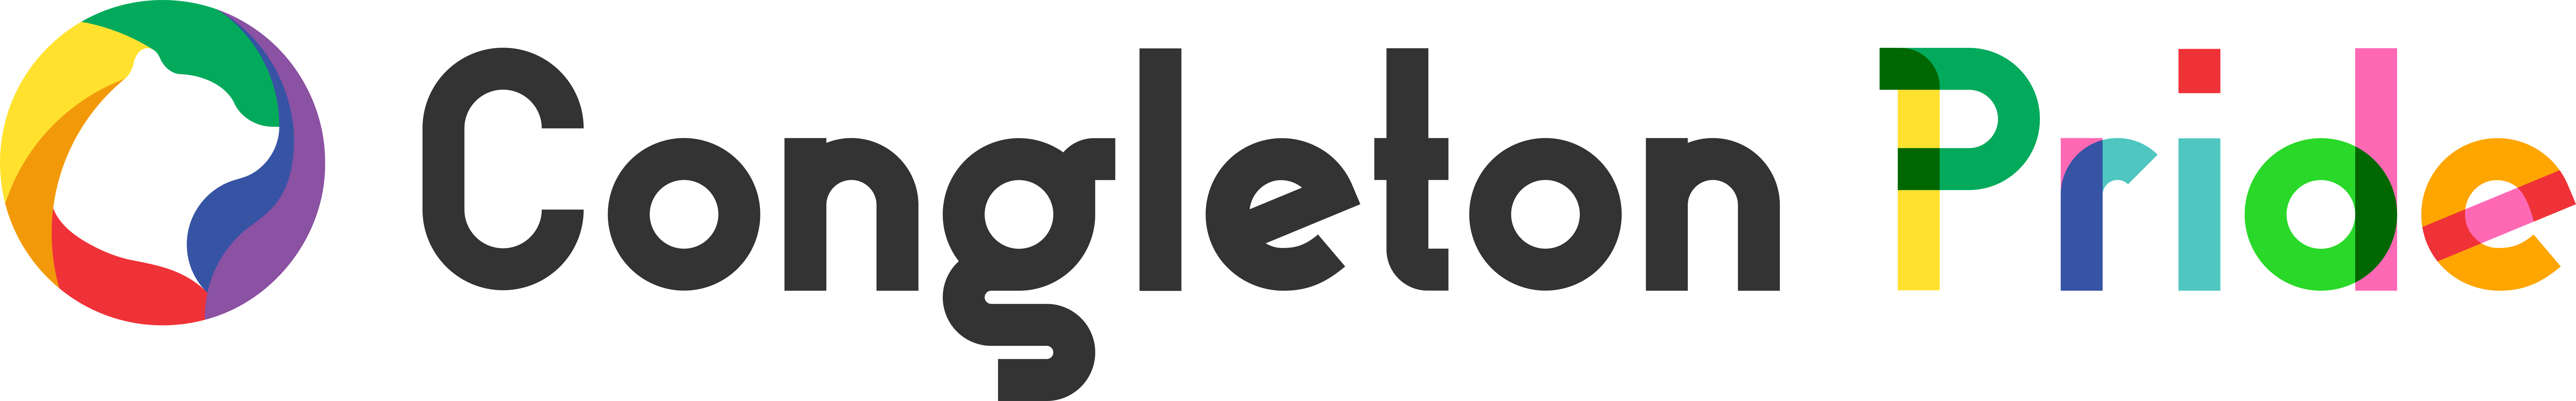 Congleton Pride, primary logo for light background